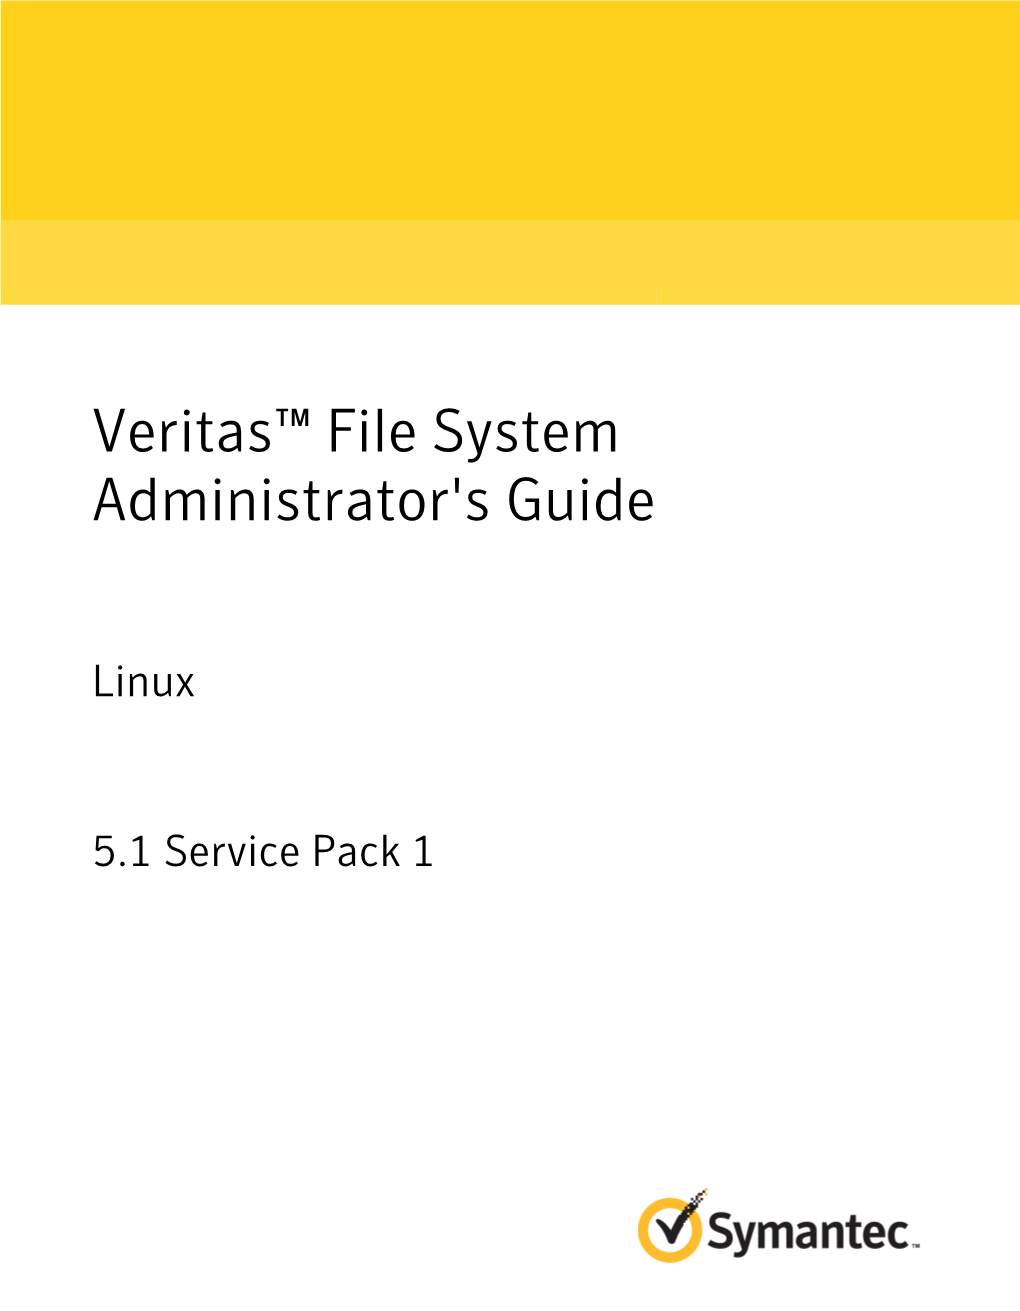 Veritas™ File System Administrator's Guide: Linux